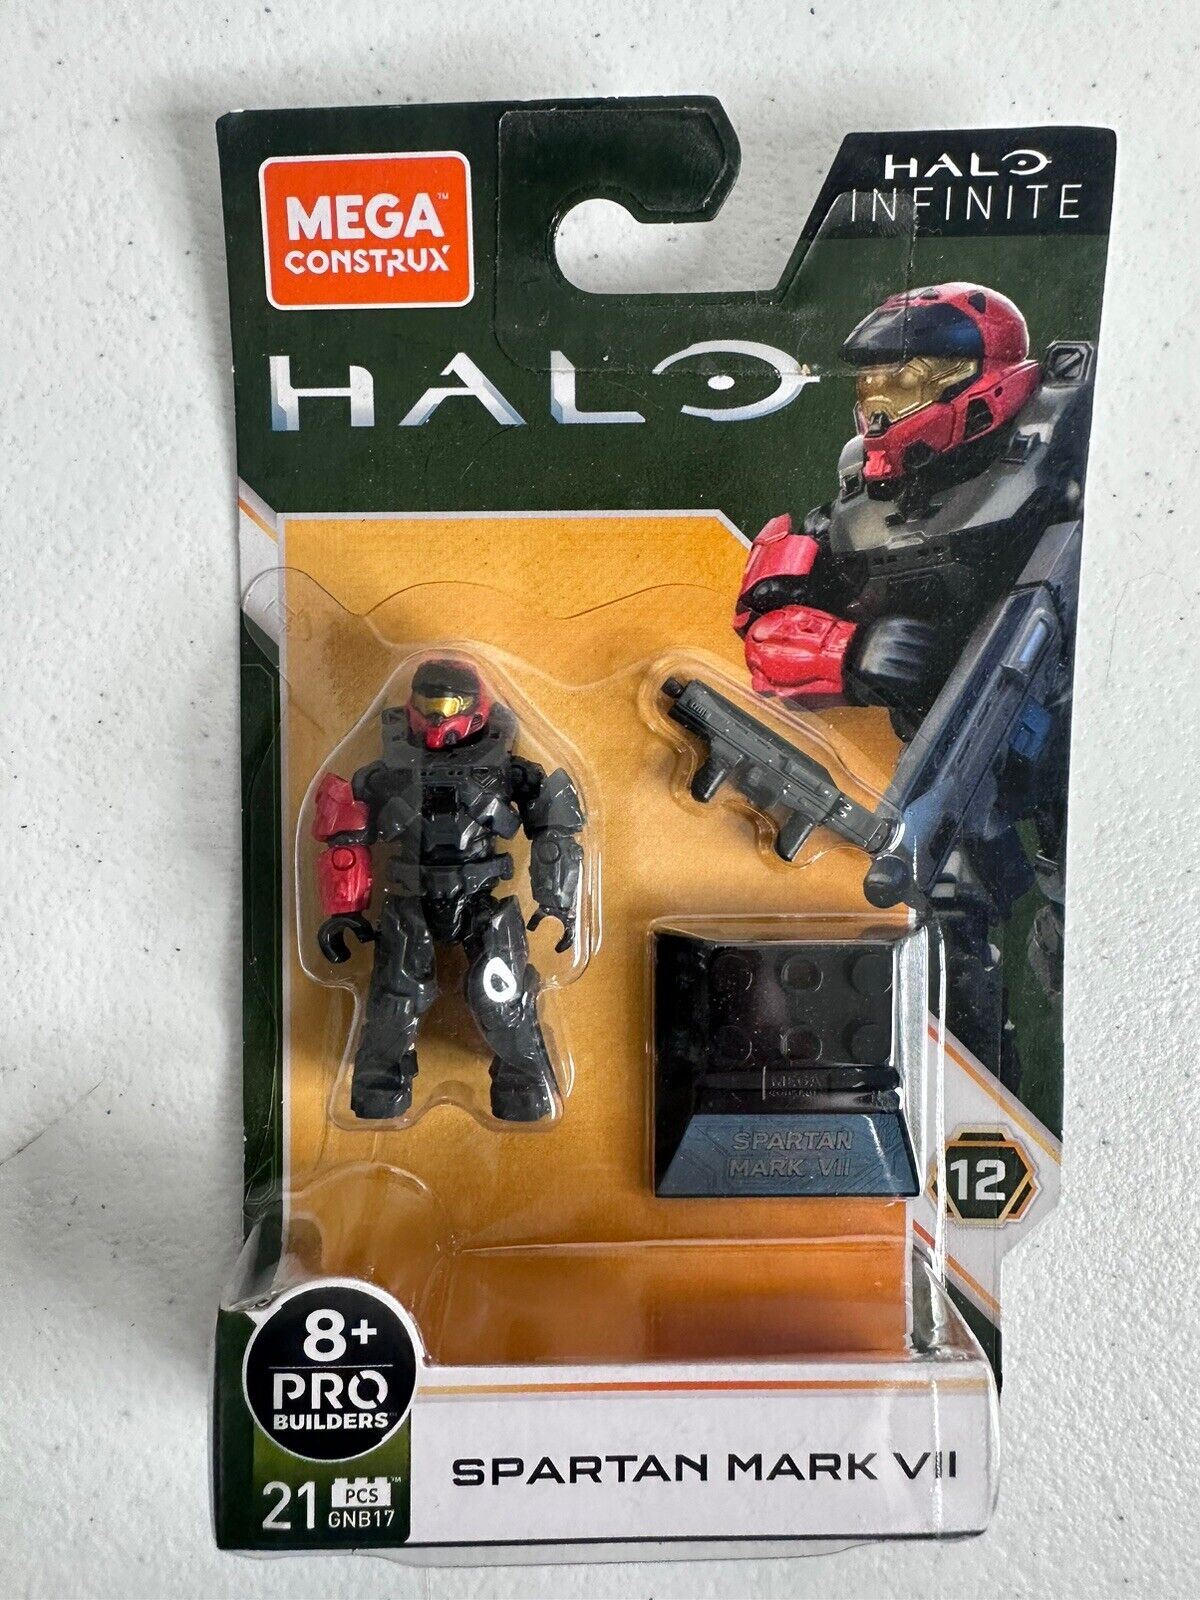 Mega Construx Halo Infinite Spartan Mark VII Collectible Figures - Sealed Lot of 2 - TreasuTiques